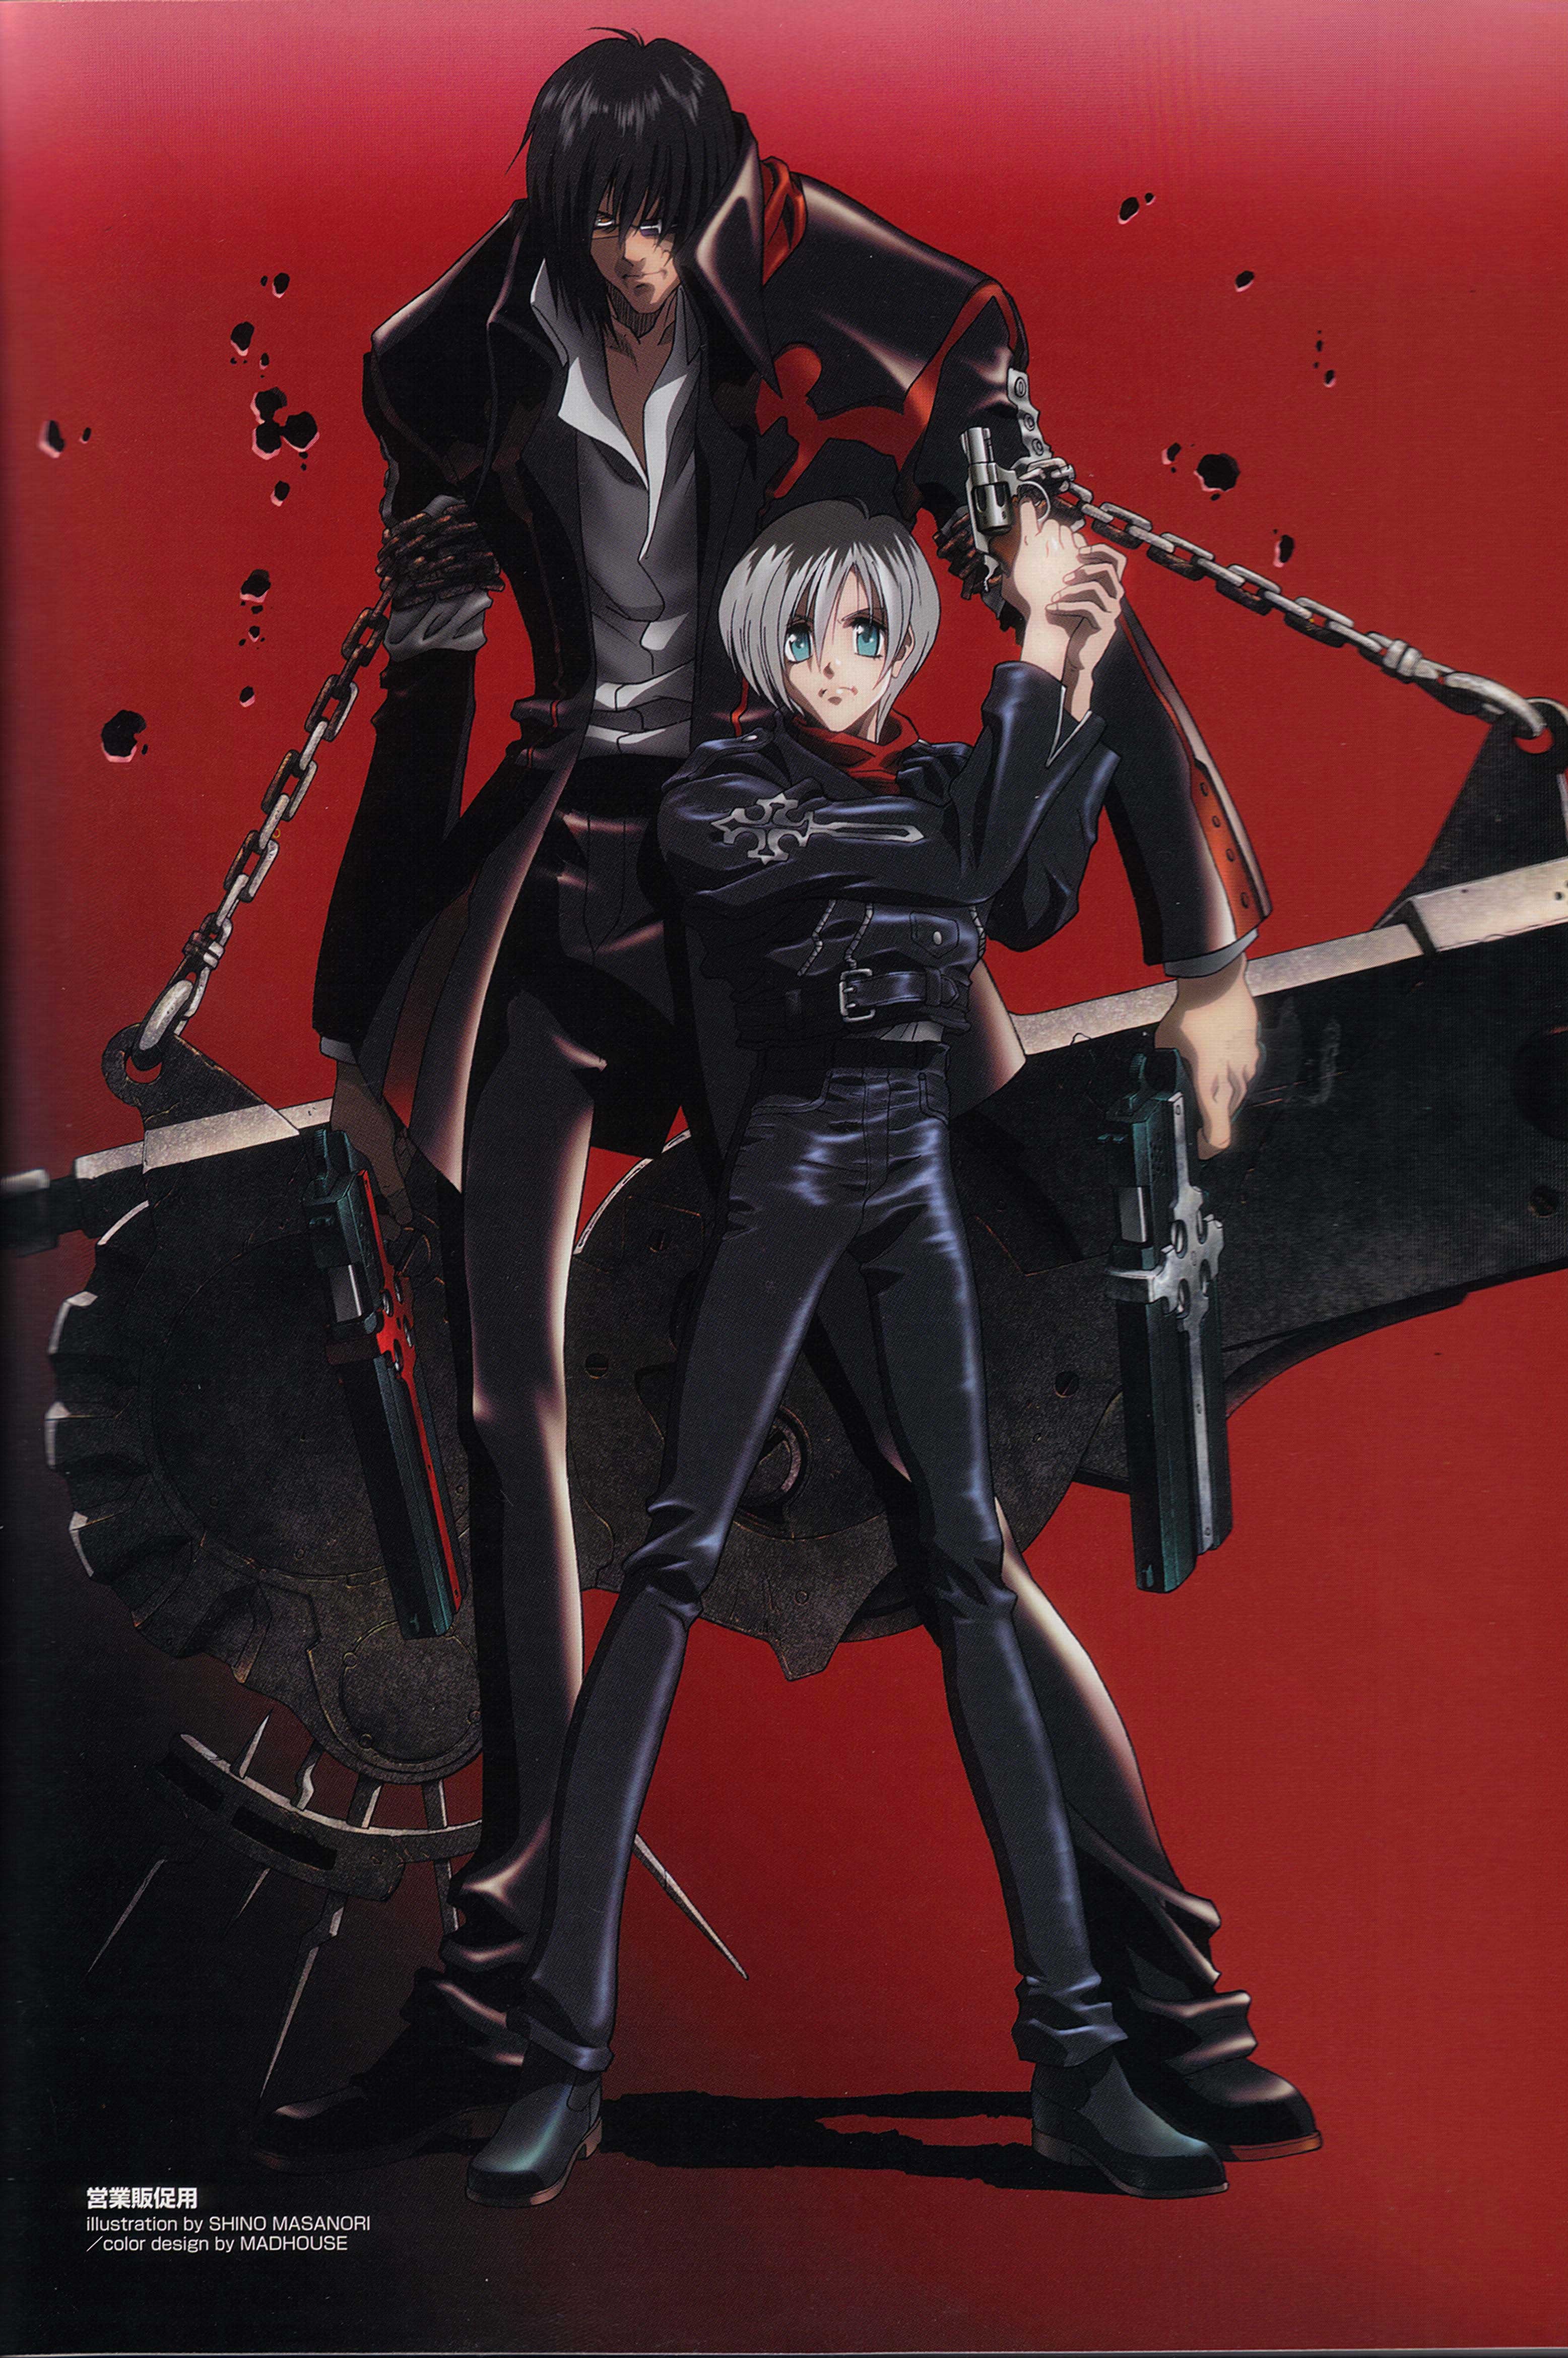 Anime 3112x4679 anime Gungrave chains gun weapon anime men red background